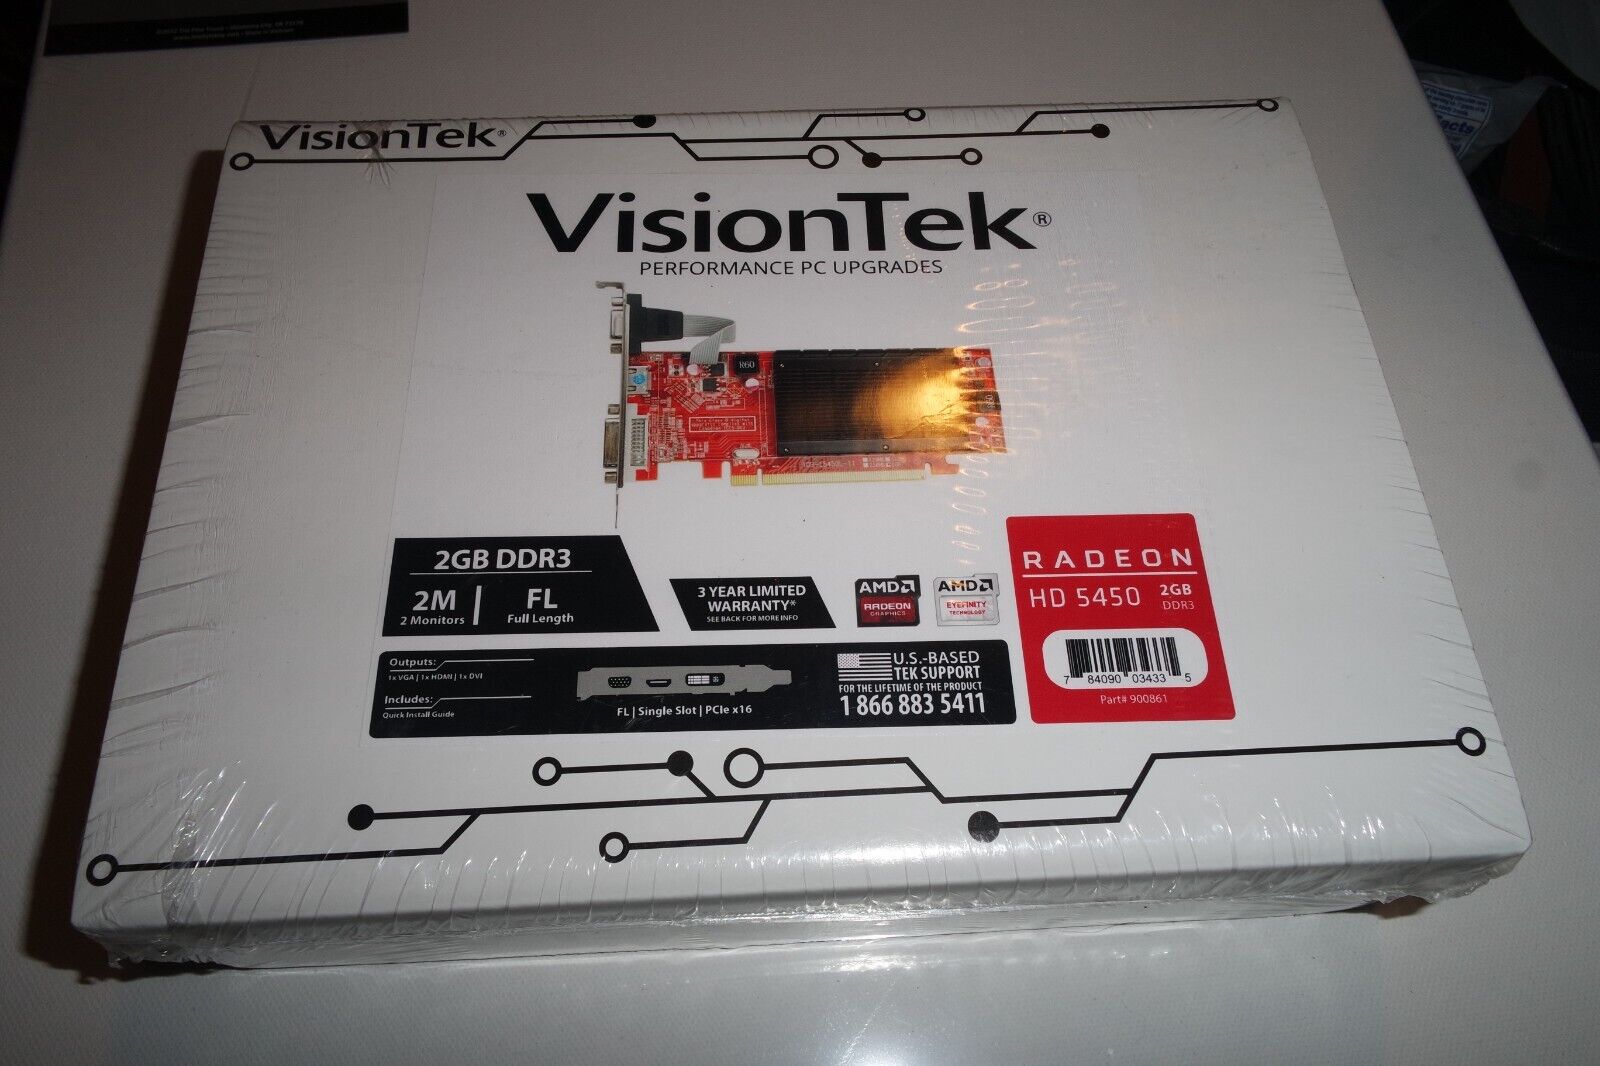 VisionTek 900861 DDR3 PCIe x16 2GB Graphic Card (New still sealed)